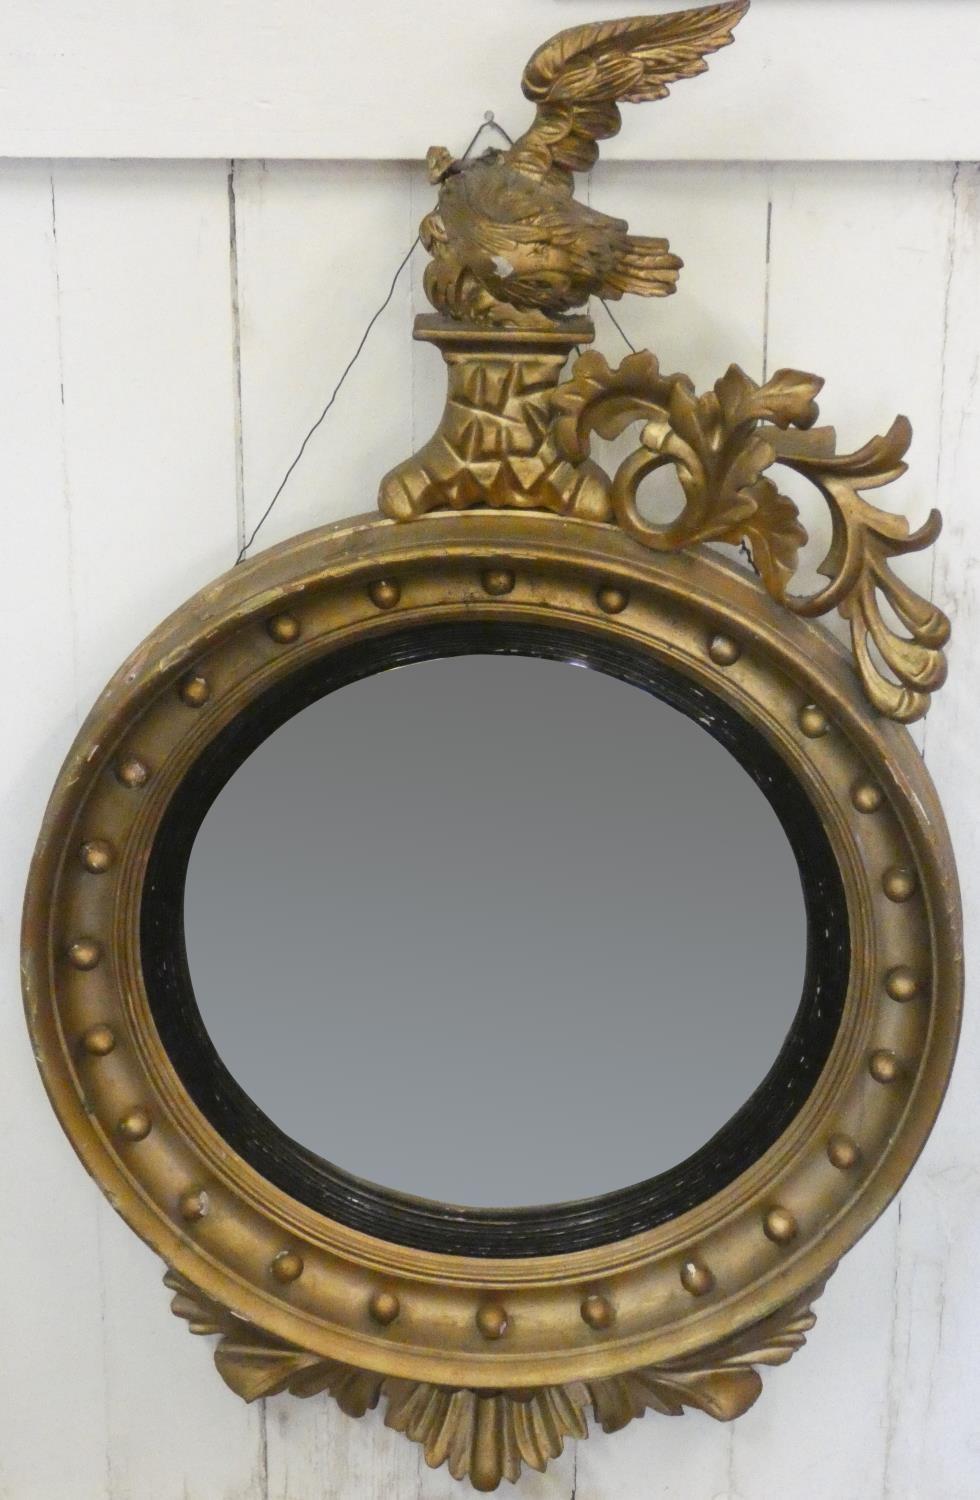 A giltwood convex circular wall mirror, with eagle and floral scroll surmount, A/F, 108 cm.